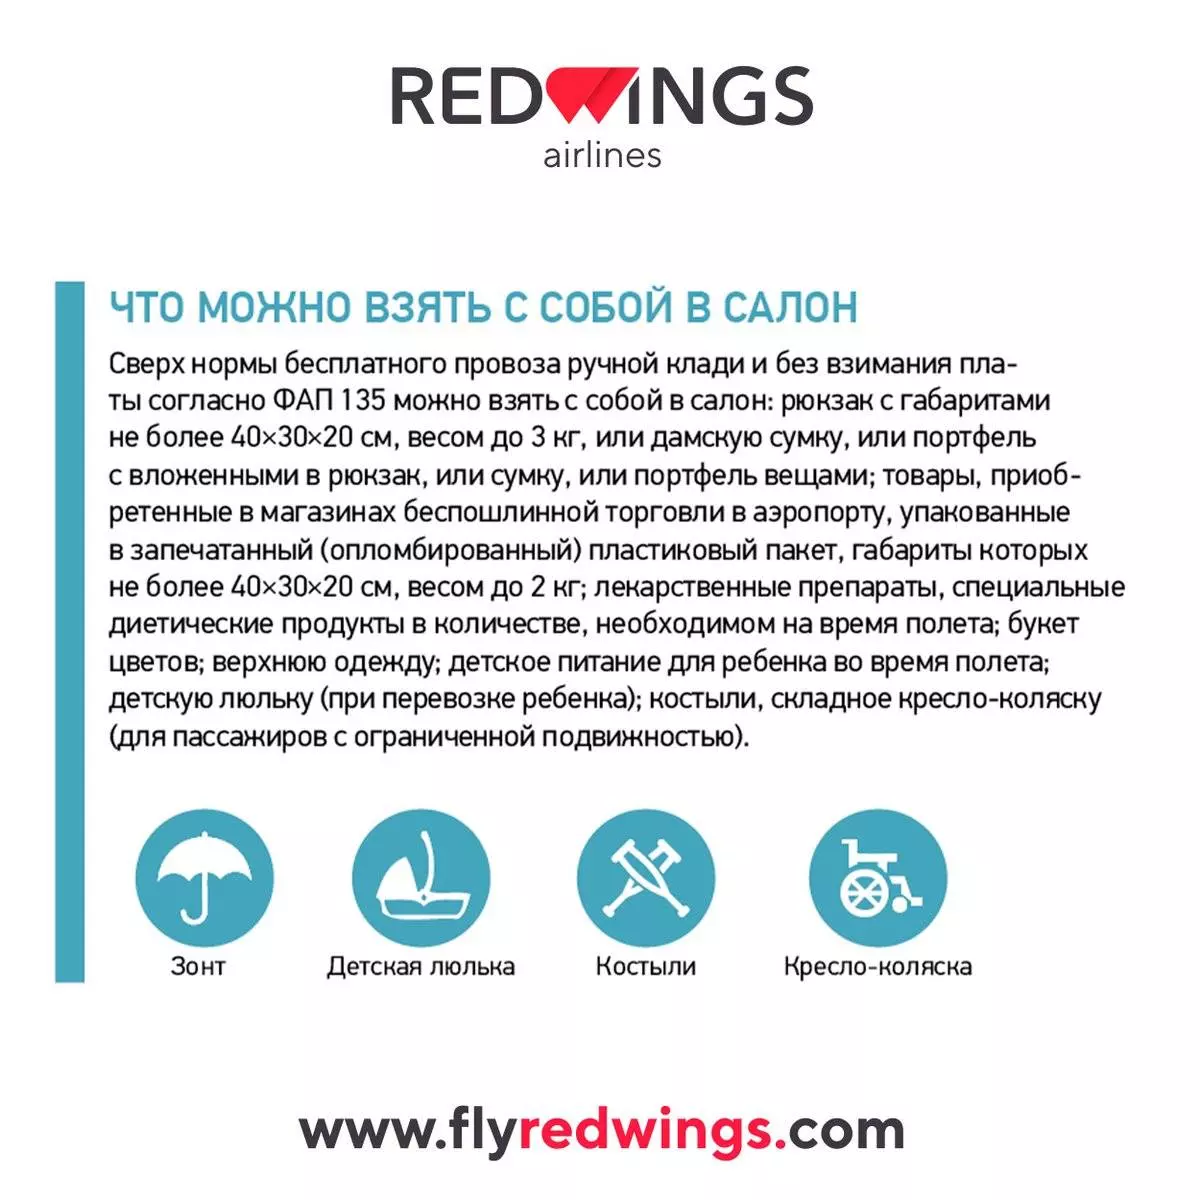 Red wings — нормы багажа и ручной клади